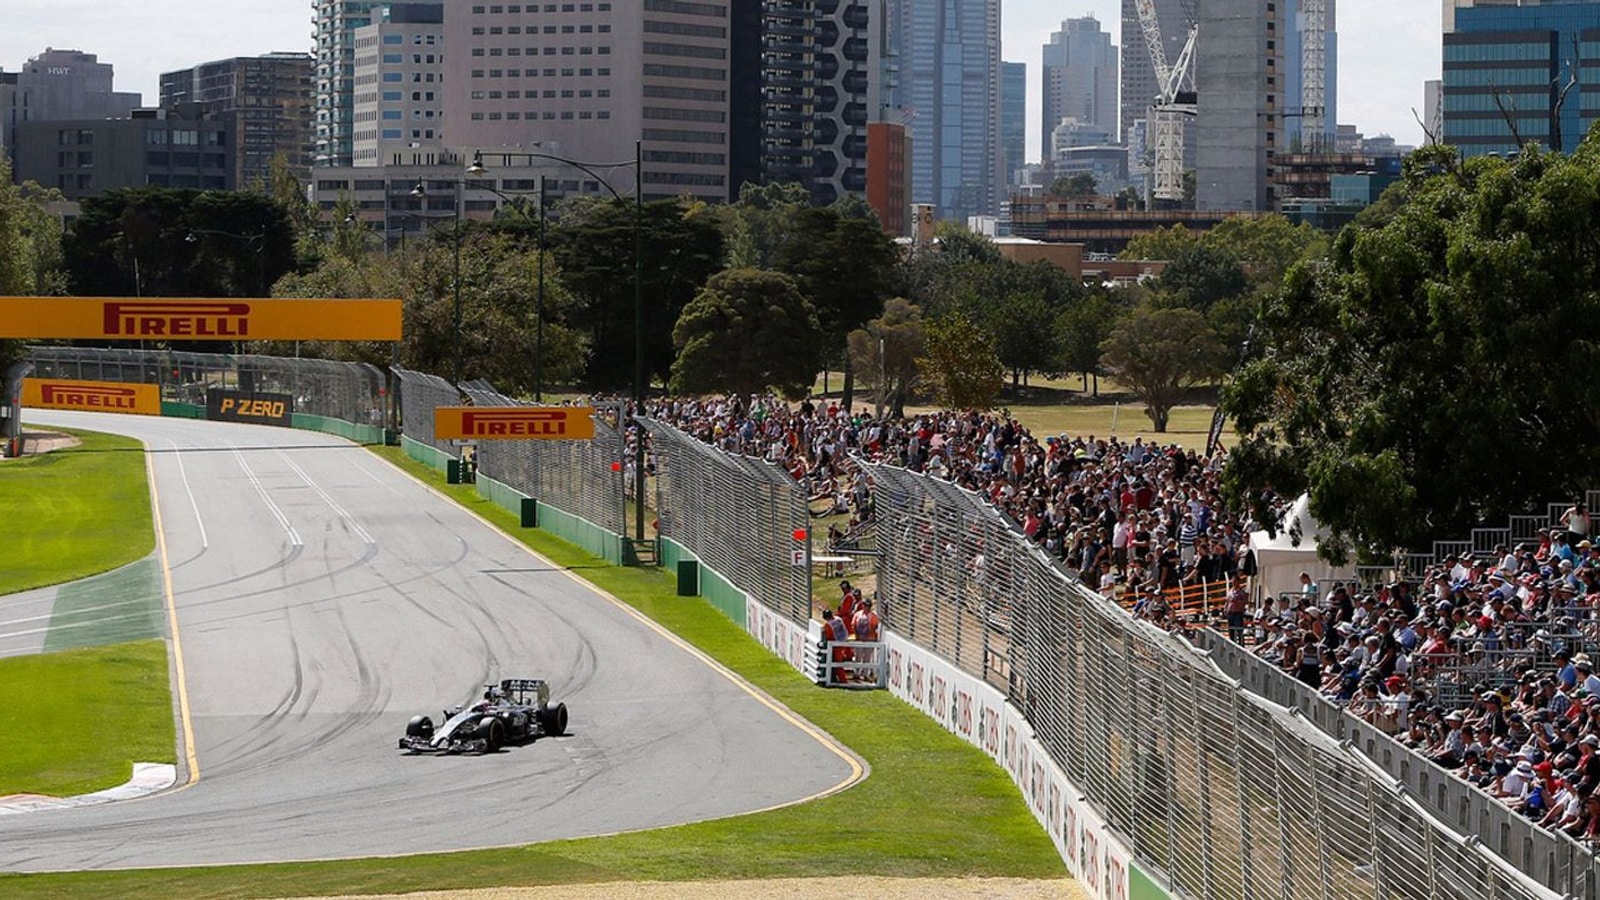 Melbourne Grand Prix Circuit, home of the Formula 1 Australian Grand Prix